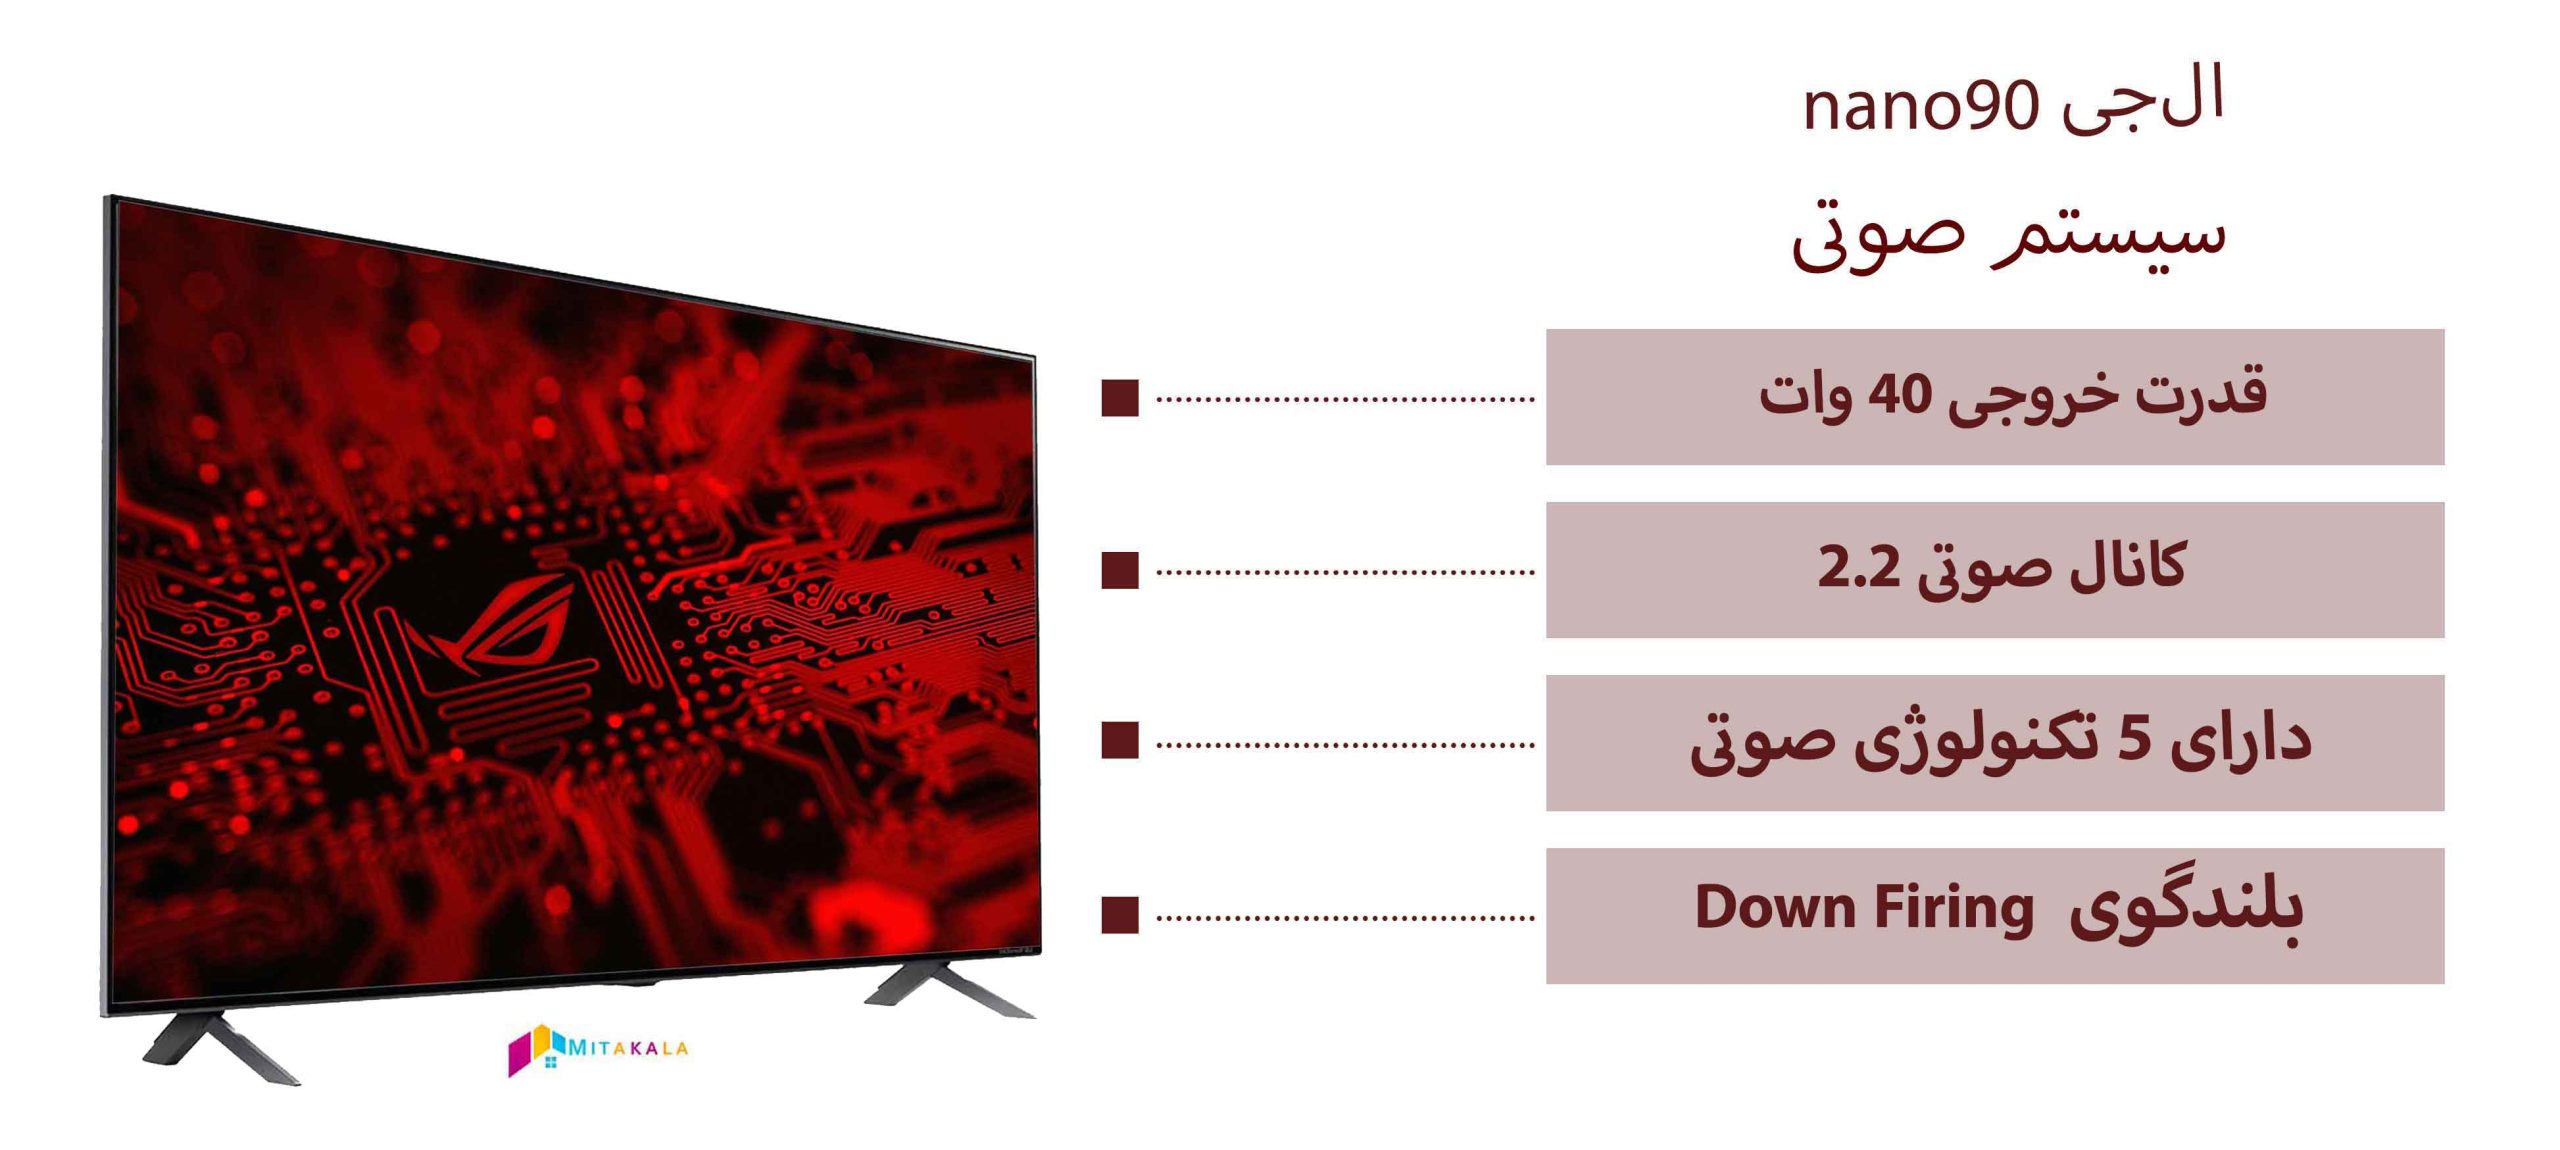 تلویزیون ال جی 75 اینچ nano90 سال 2021